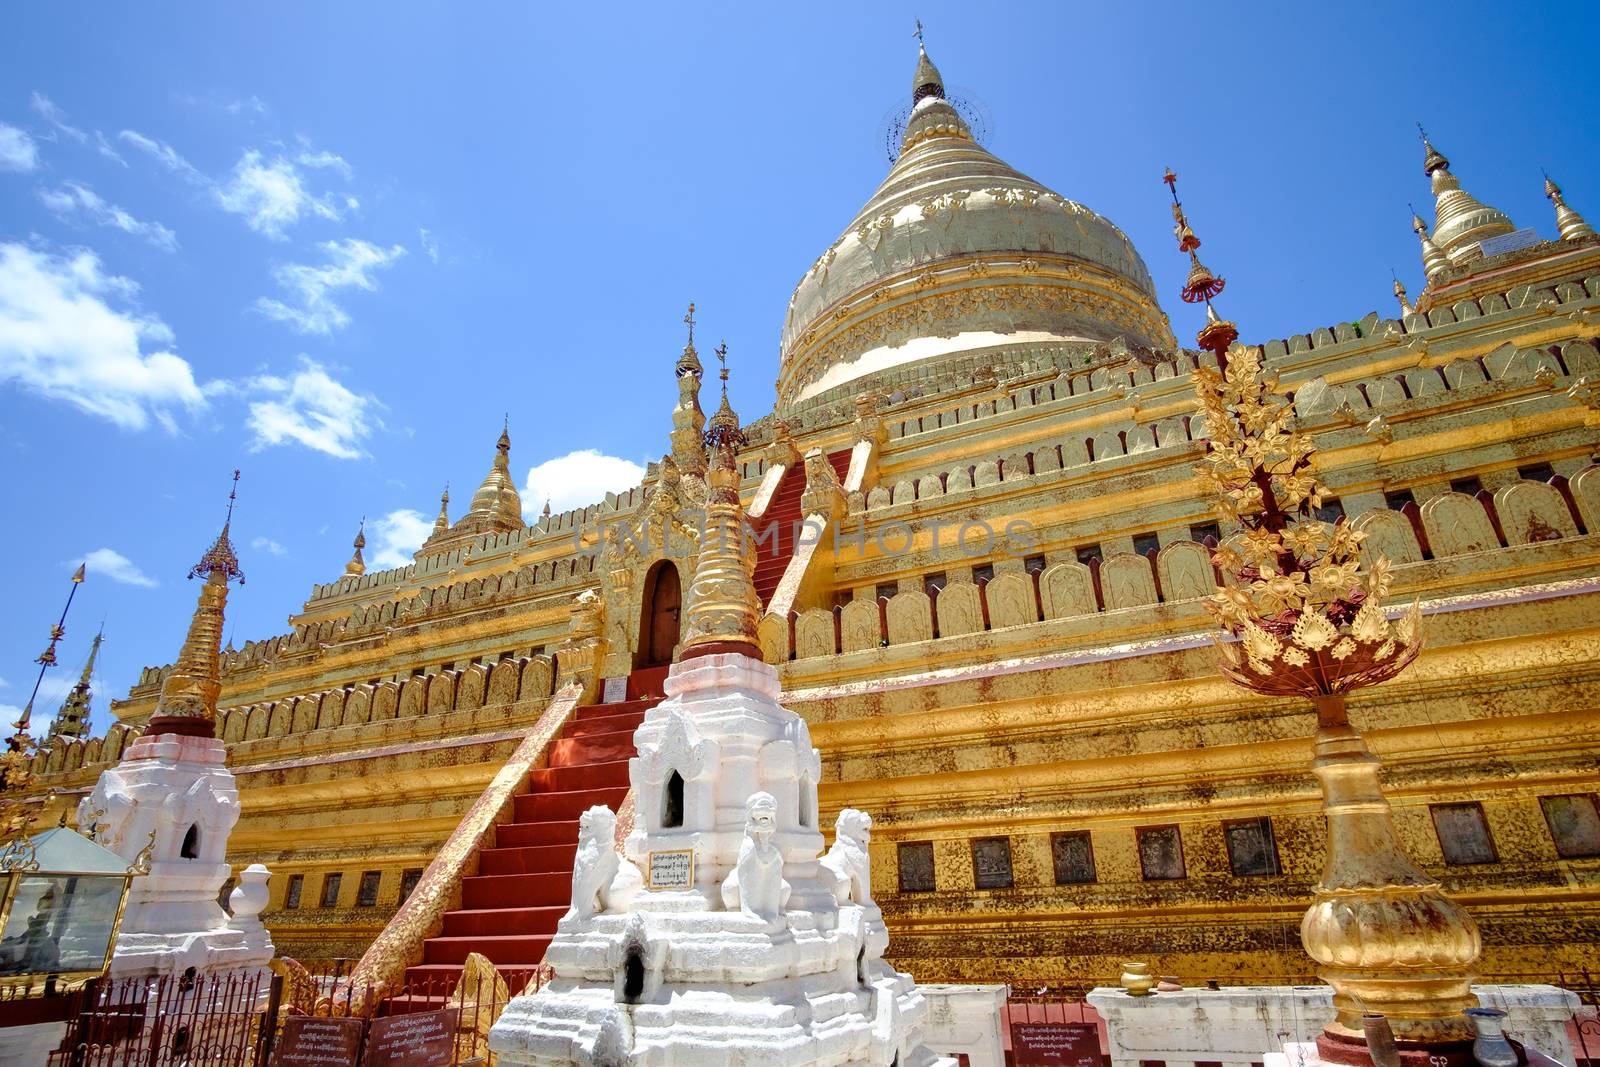 Scenic view of golden Shwezigon pagoda, Bagan, Myanmar by martinm303